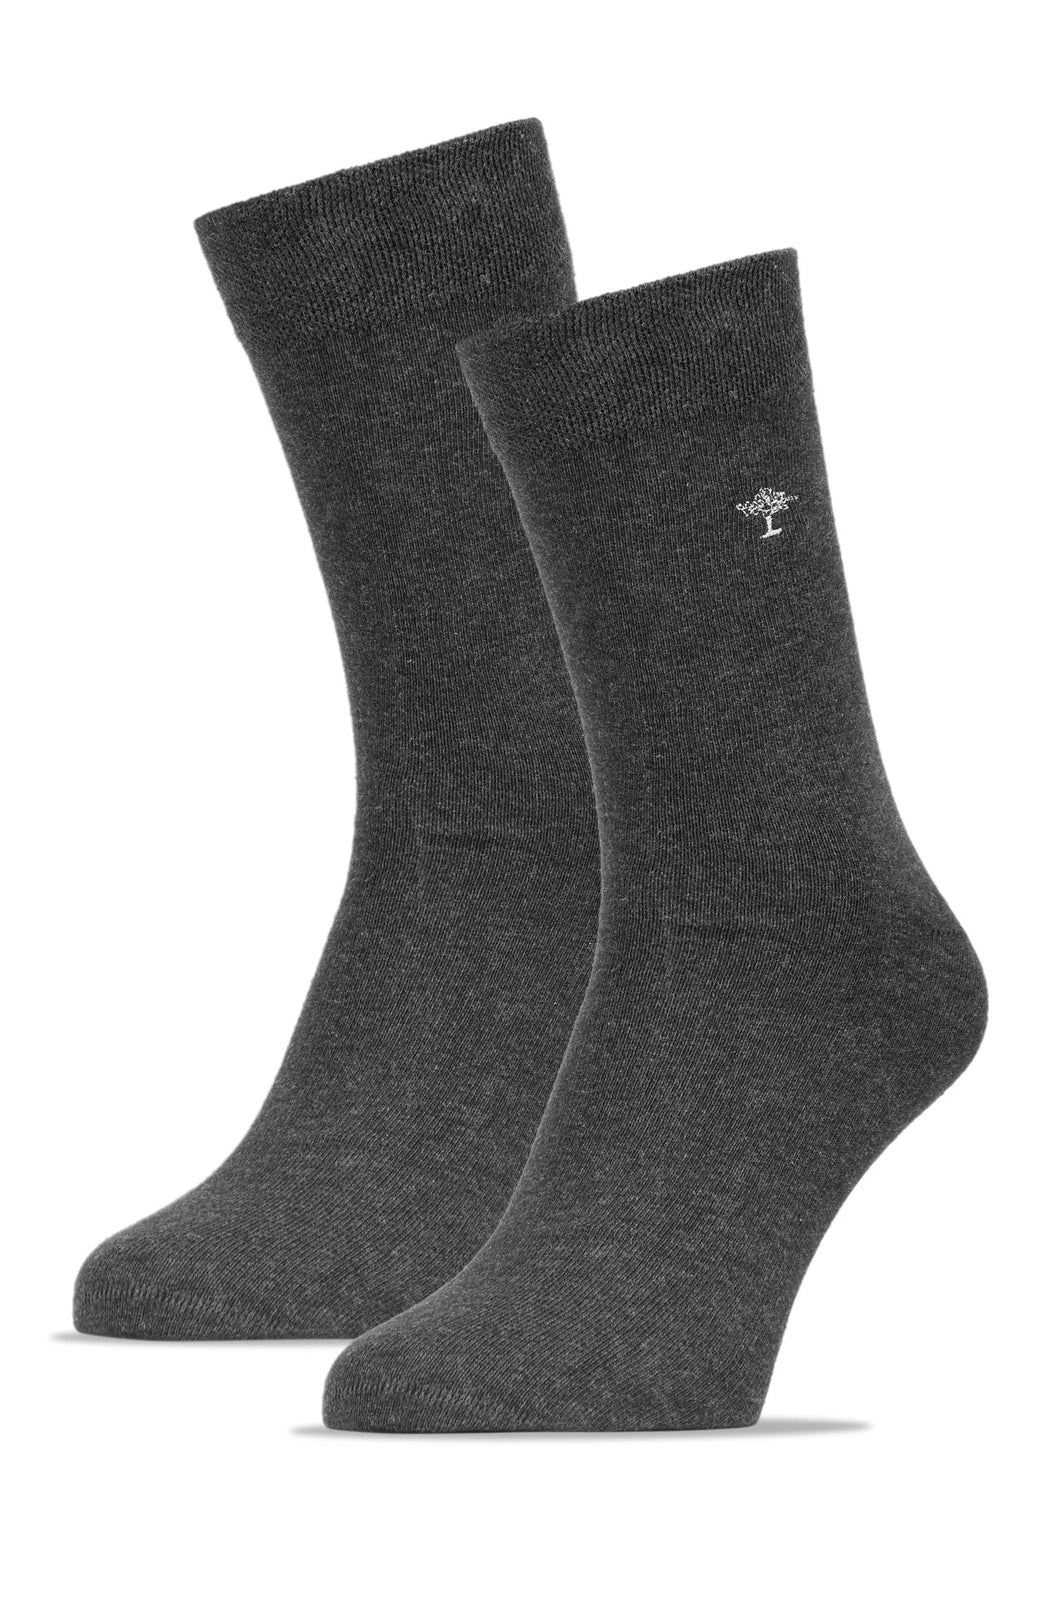 FYNCH HATTON Logo Socks - Men's Double Pack – Anthra